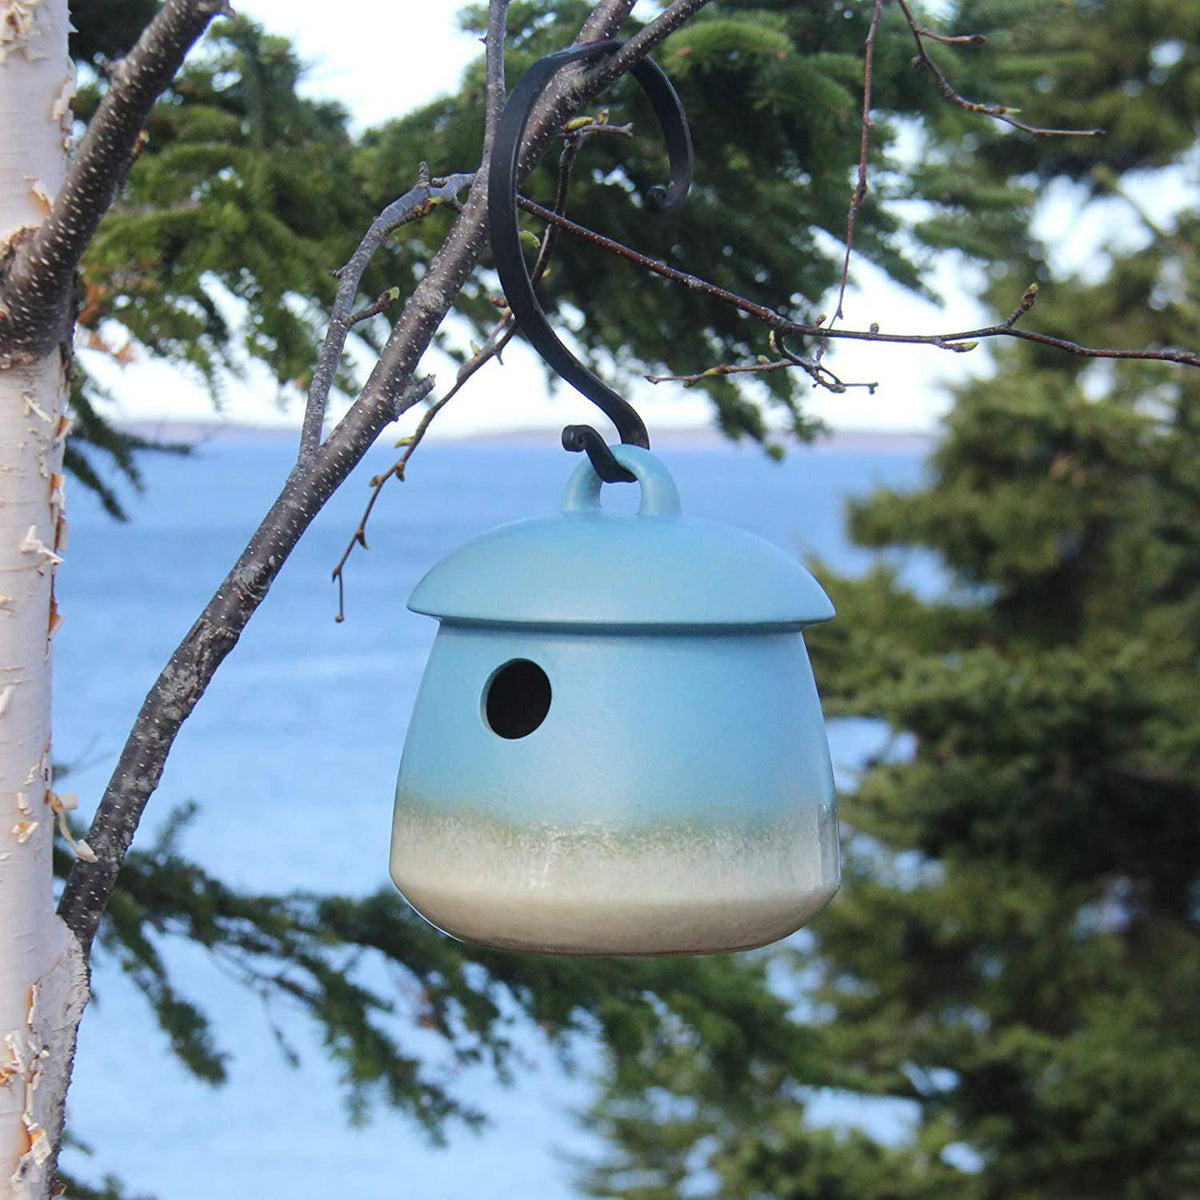 Return Bird Home, from Byer of Maine